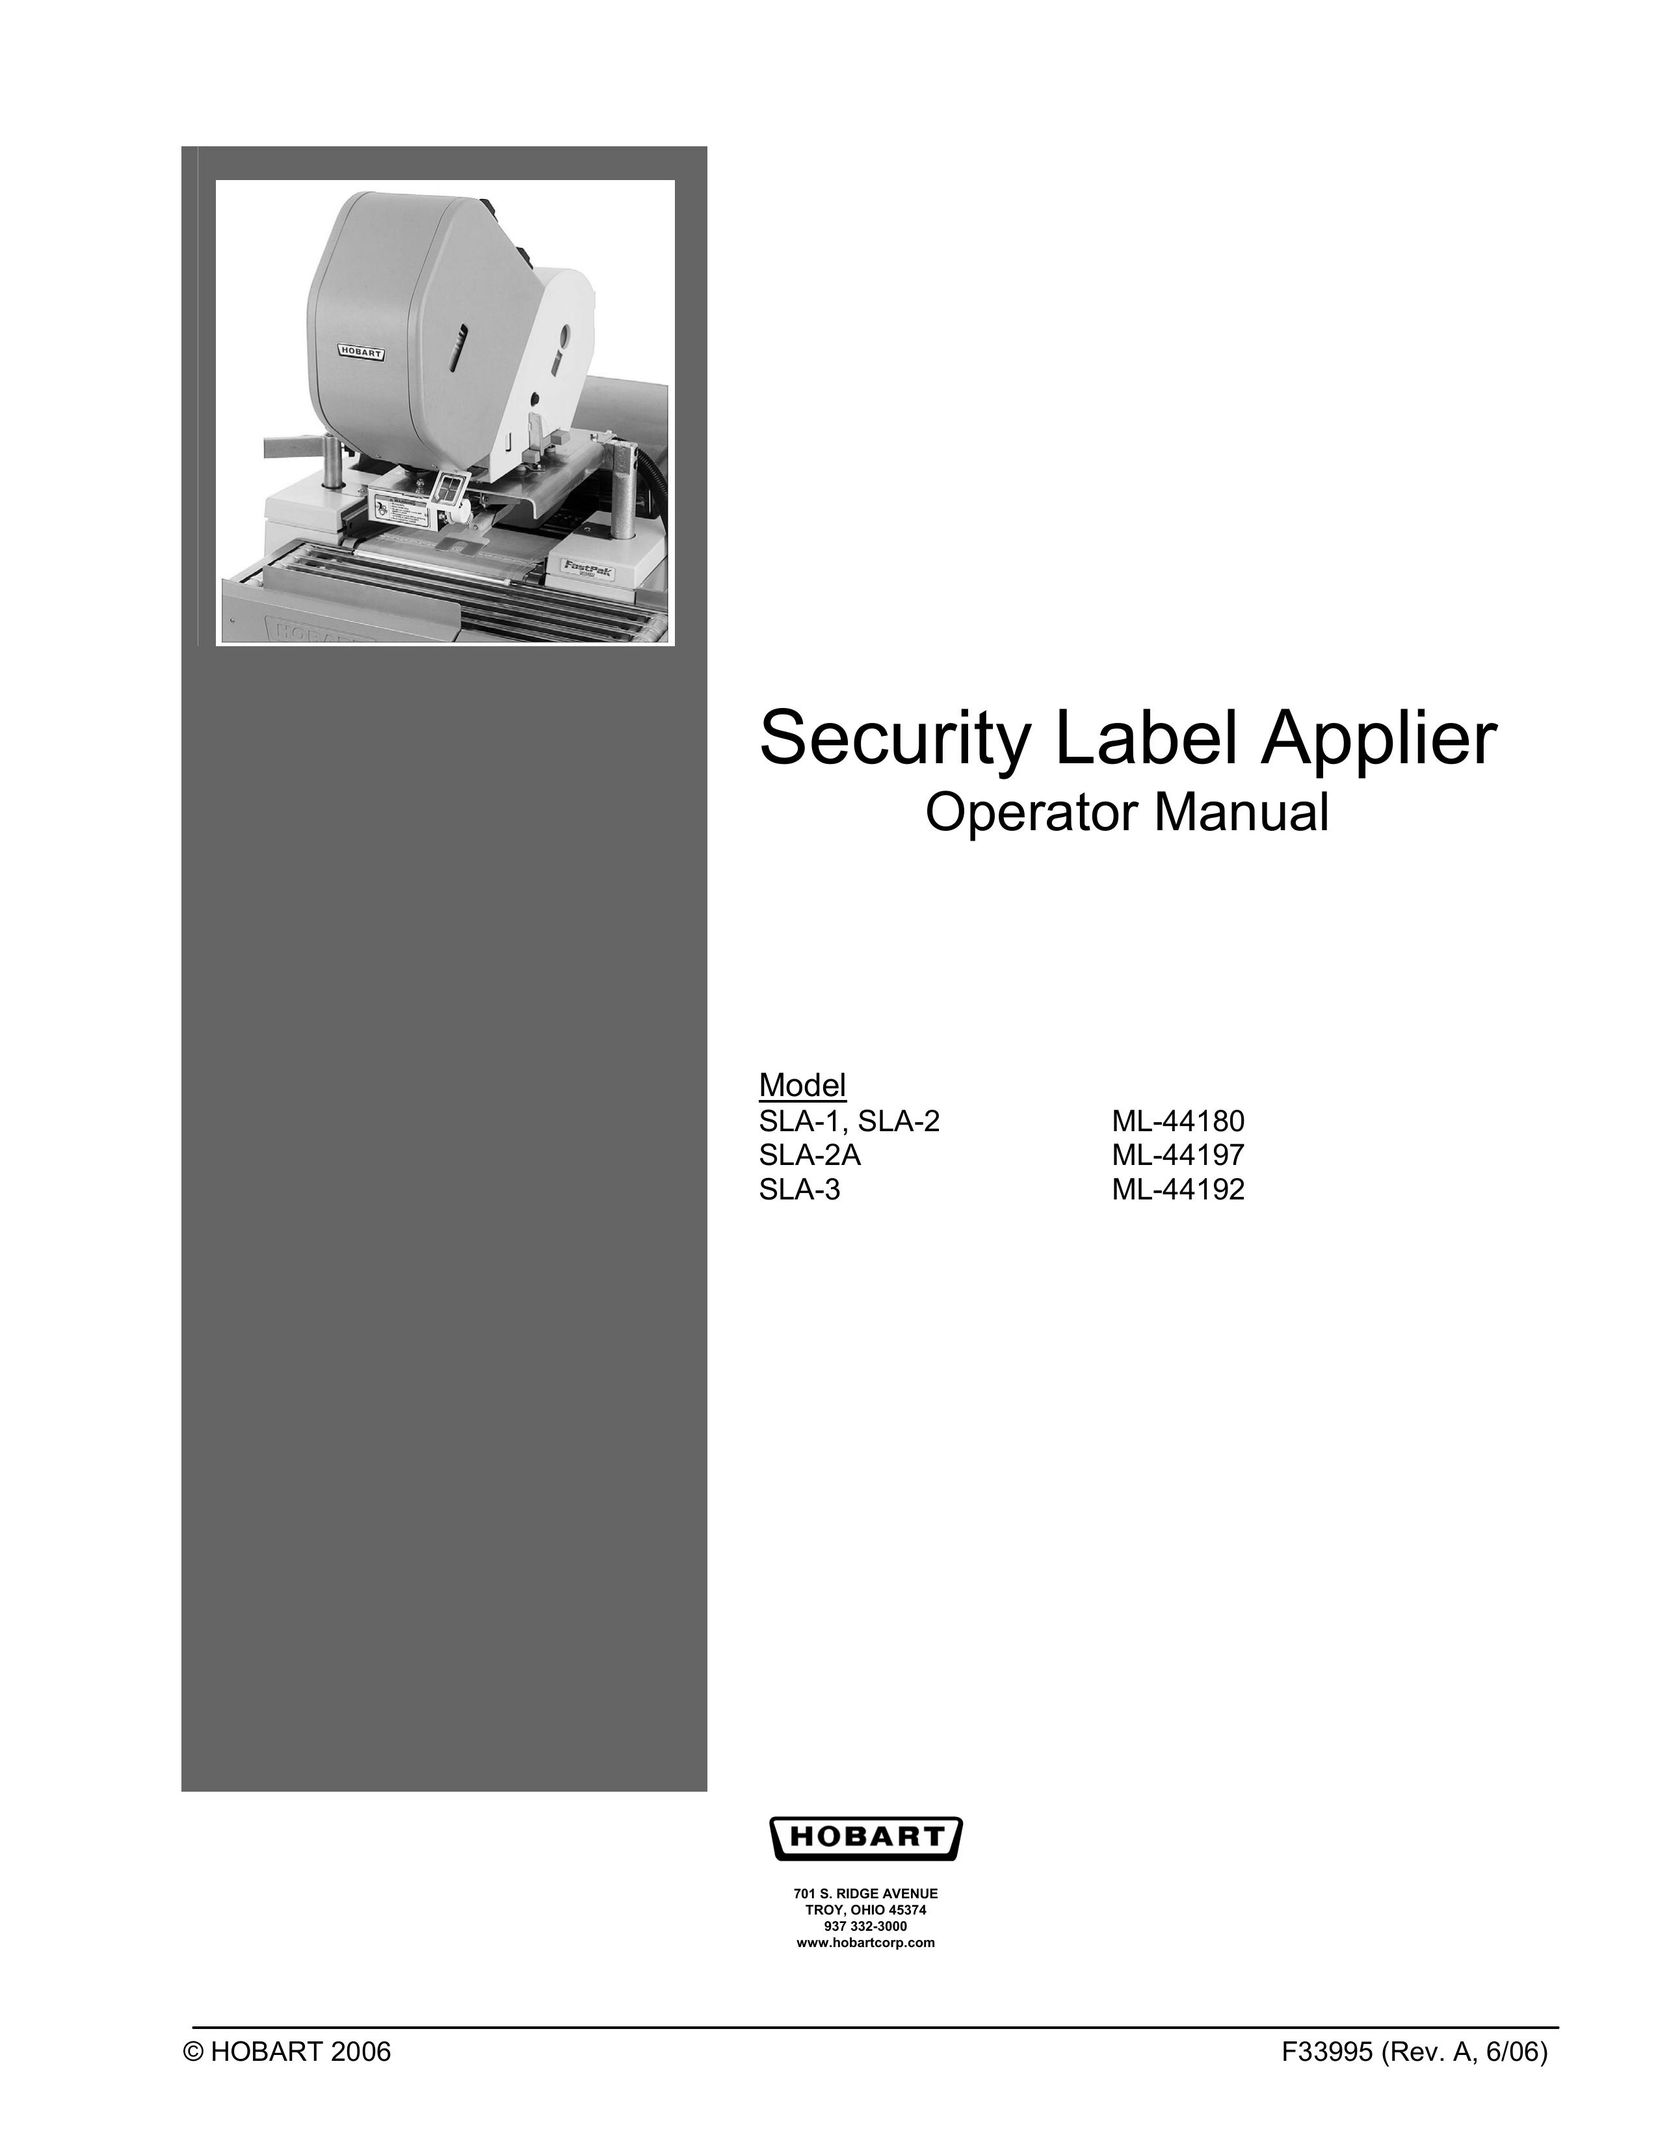 Hobart SLA-2 ML-44180 Label Maker User Manual